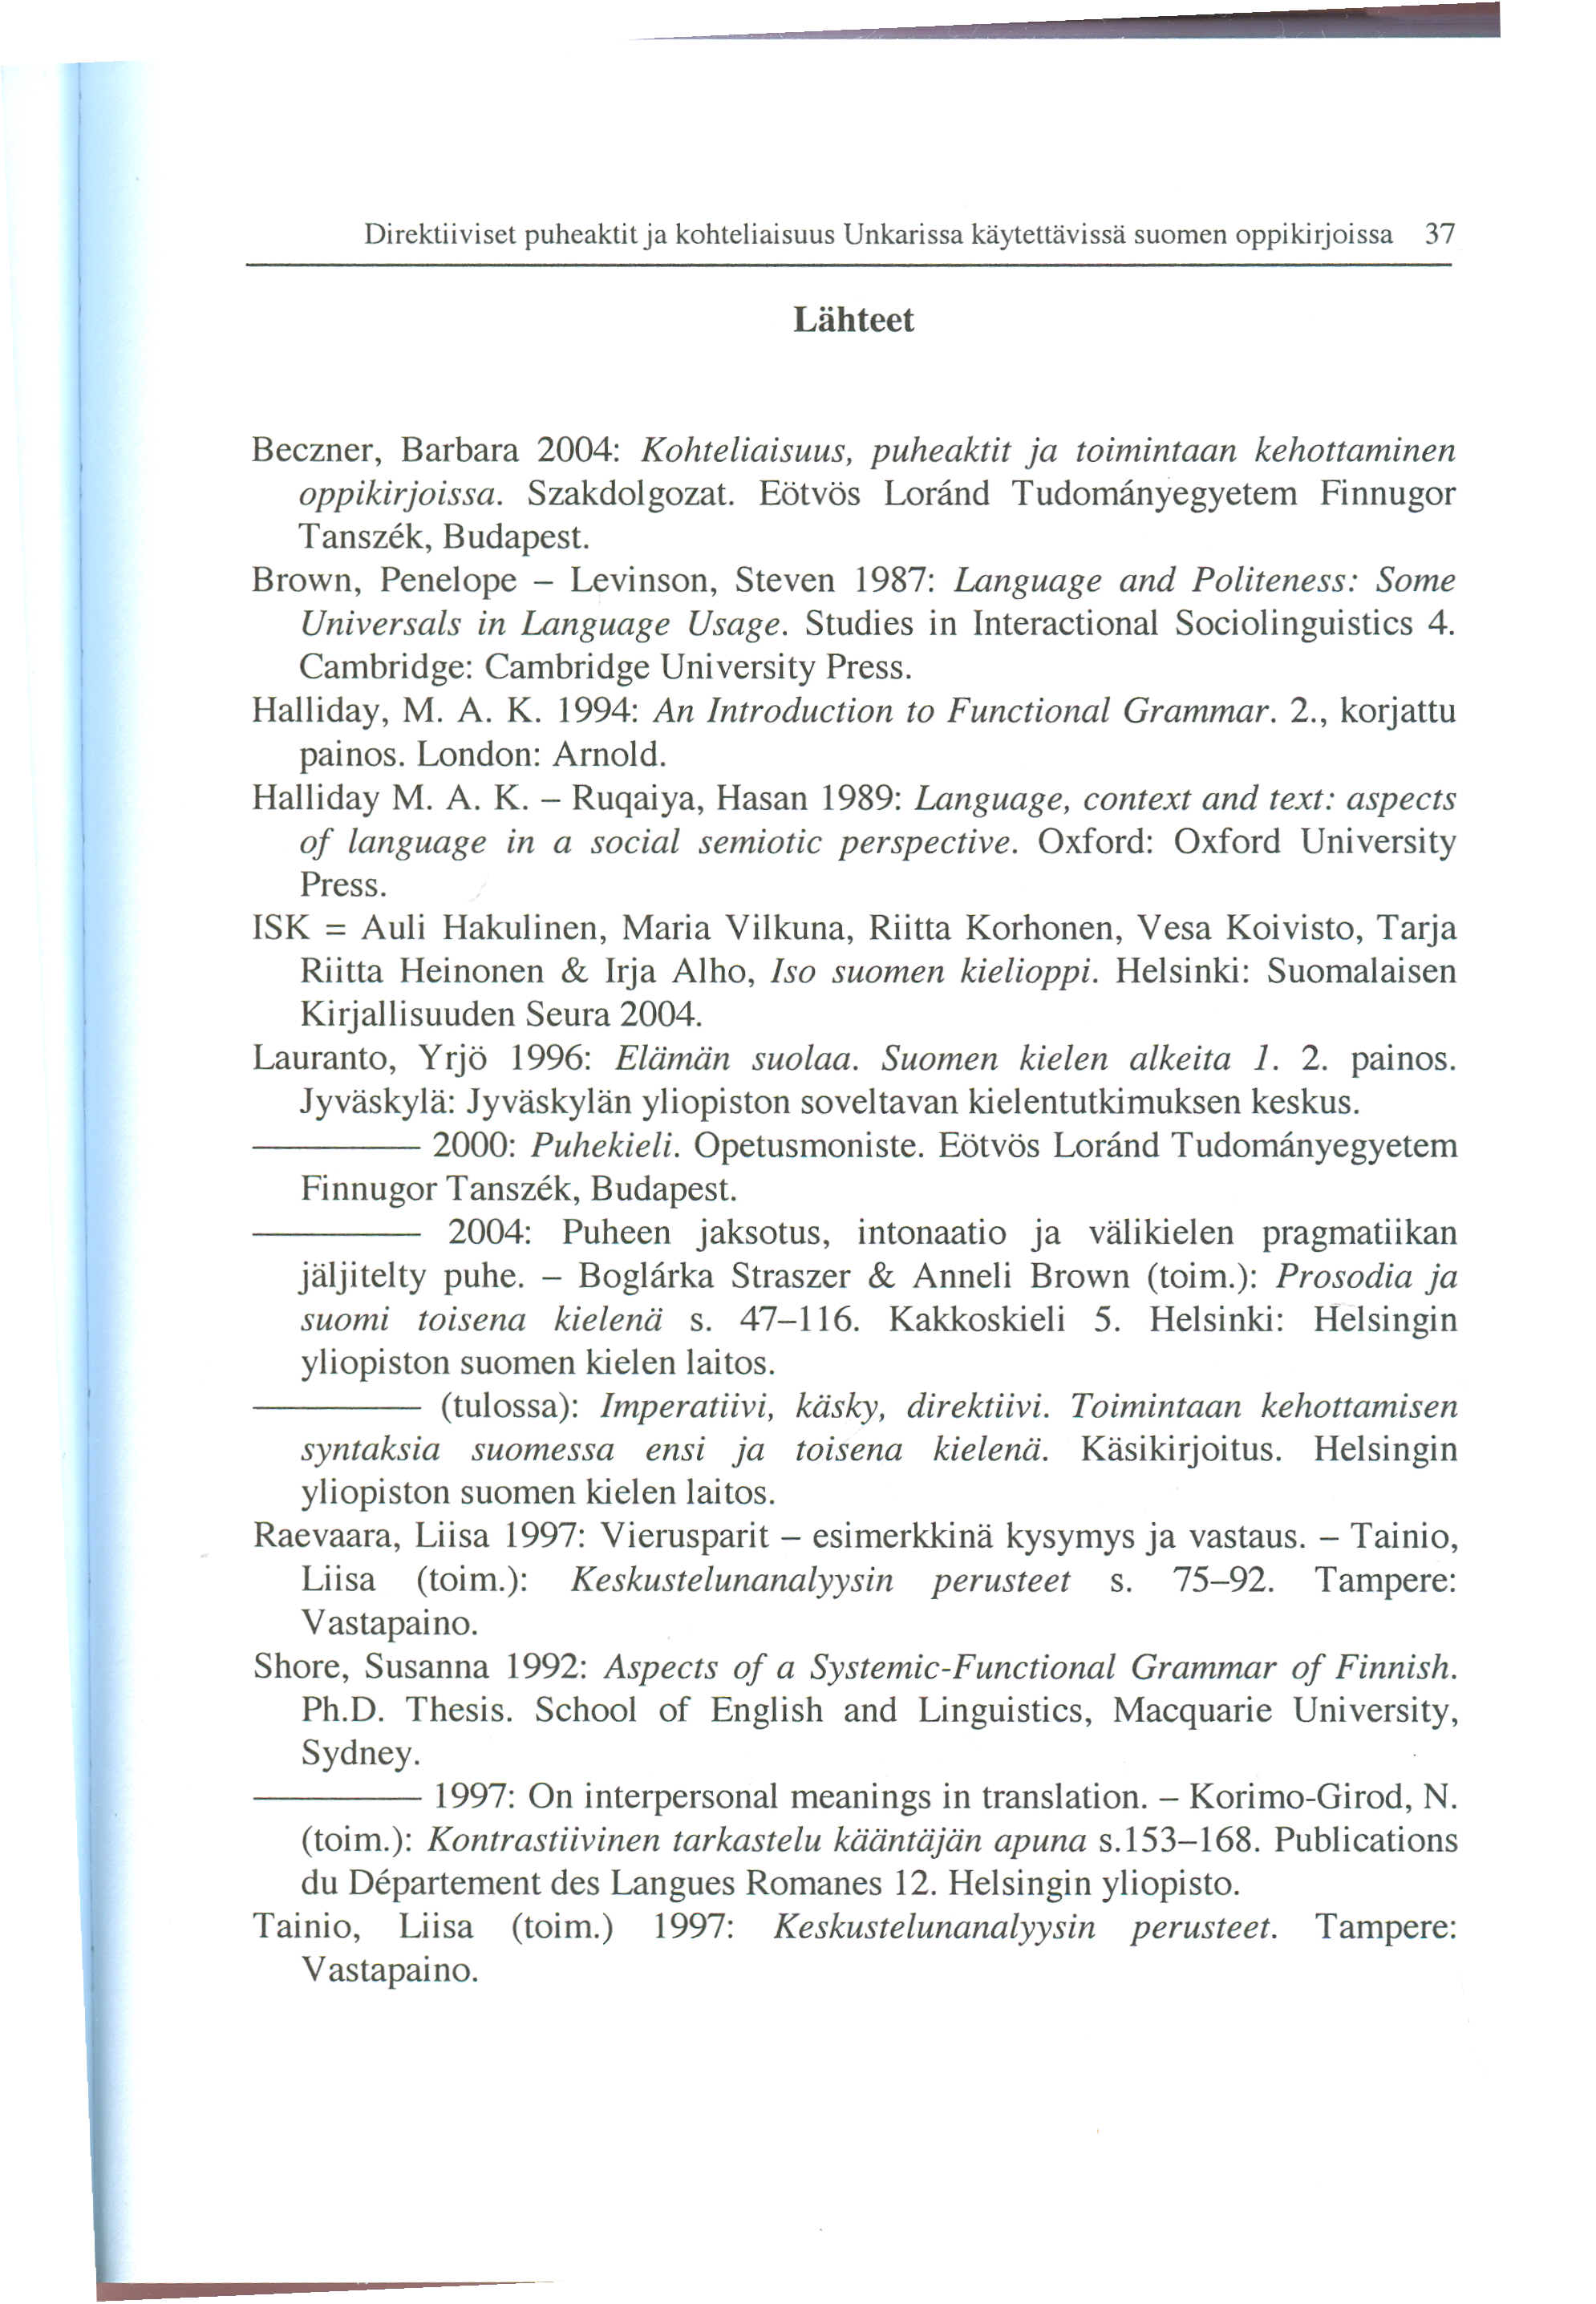 Beczner, Barbara 2004: Kohteliaisuus, puheaktit ja toimintaan kehottaminen oppikirjoissa. Szakdolgozat. Eötvös Loránd Tudományegyetem Finnugor Tanszék, Budapest.